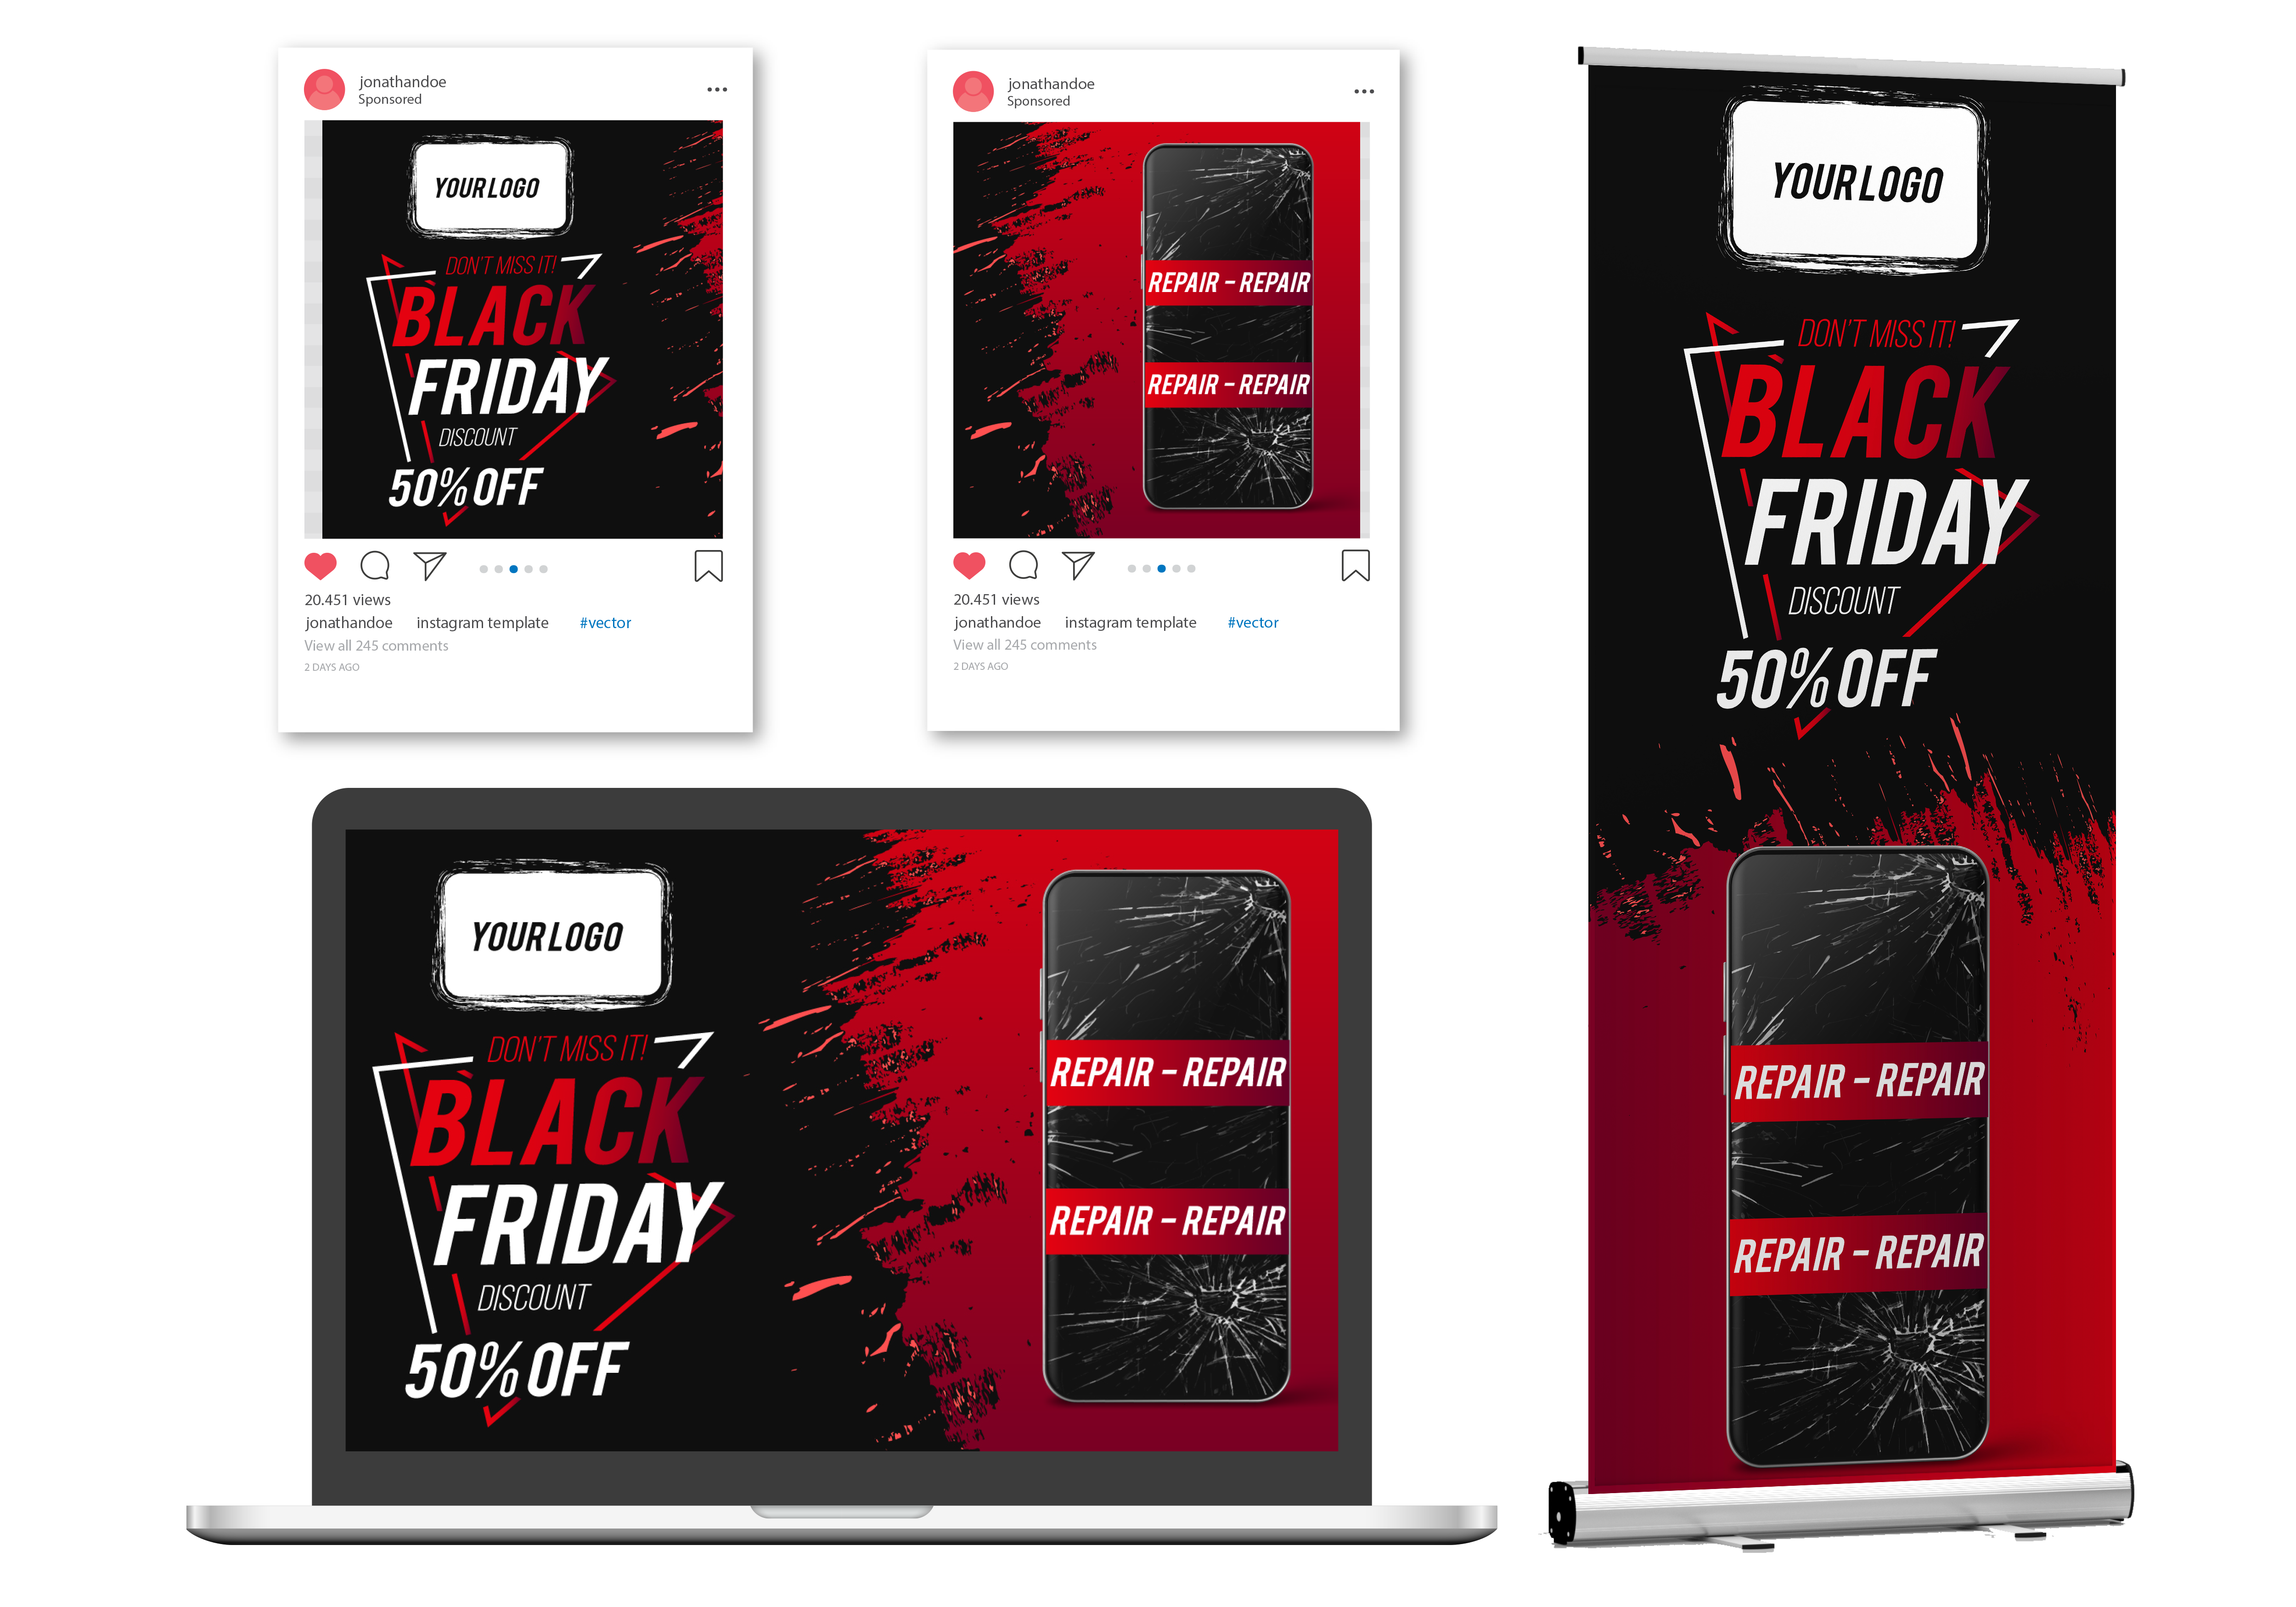 RepairDesk is offering FREE Black Friday Marketing Toolkit for Repair Shops